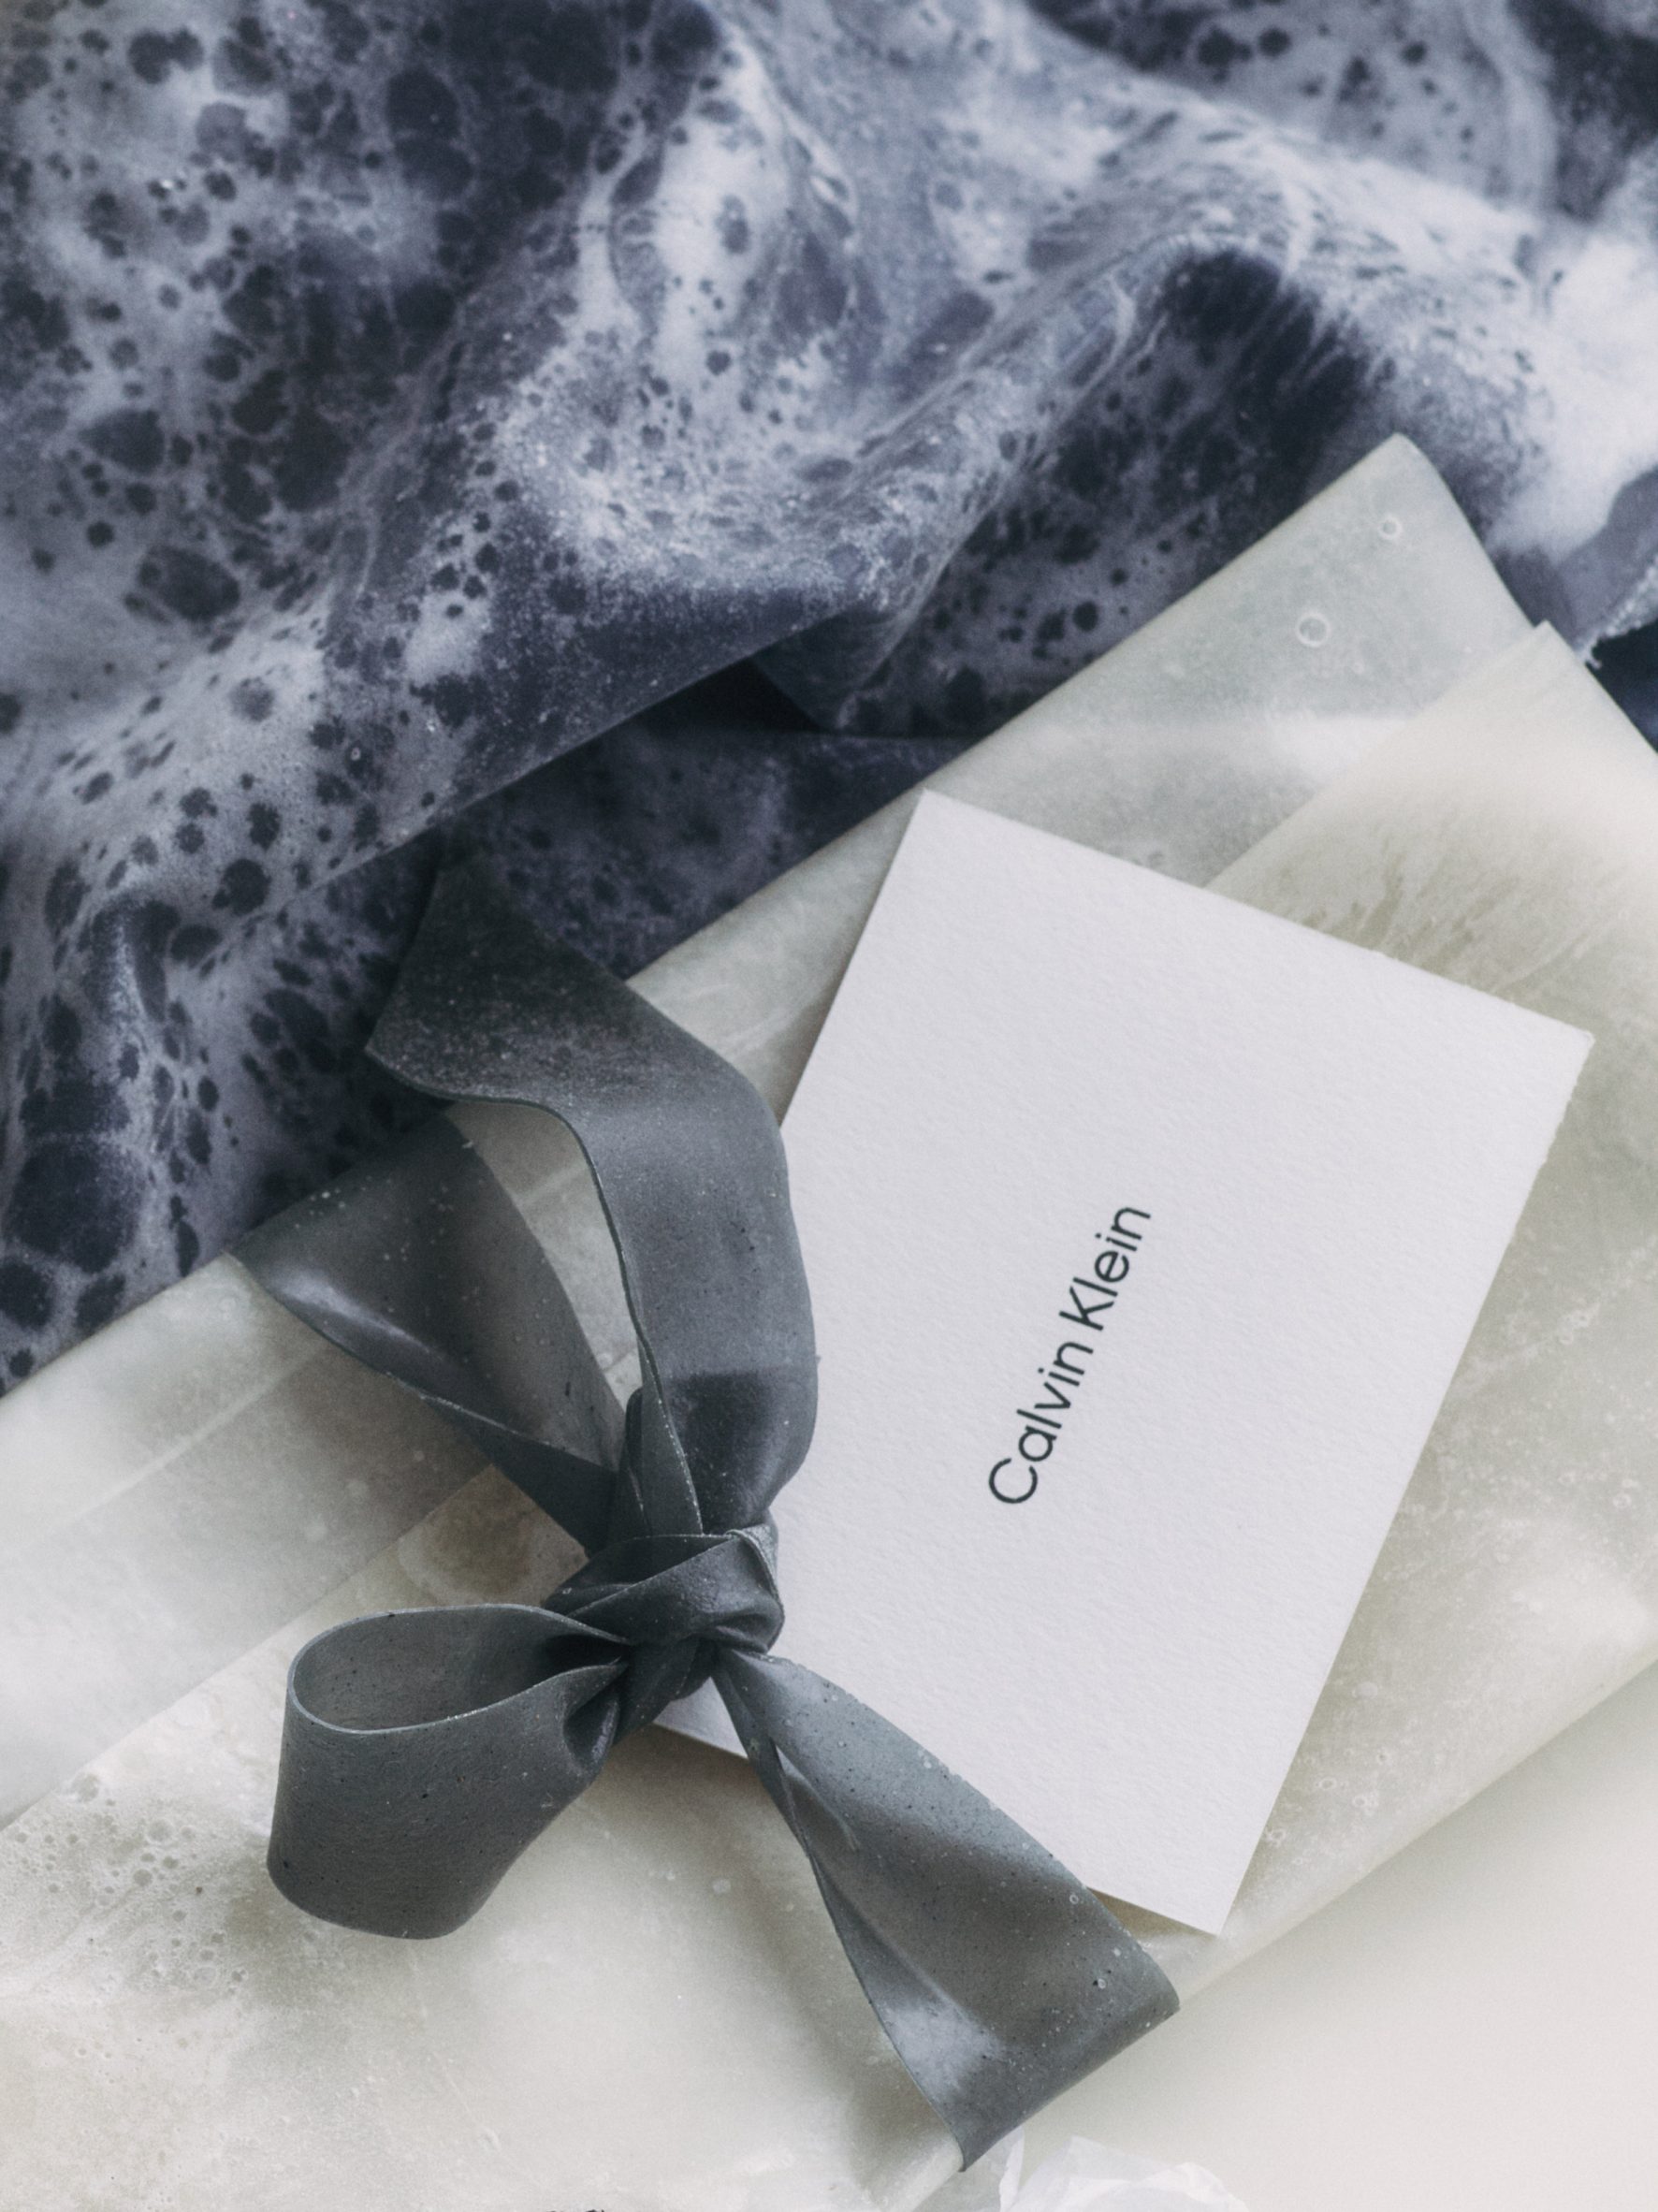 Louis Vuitton 3 Pc Set - Mini Box, Ribbon, Gift Envelope Authentic